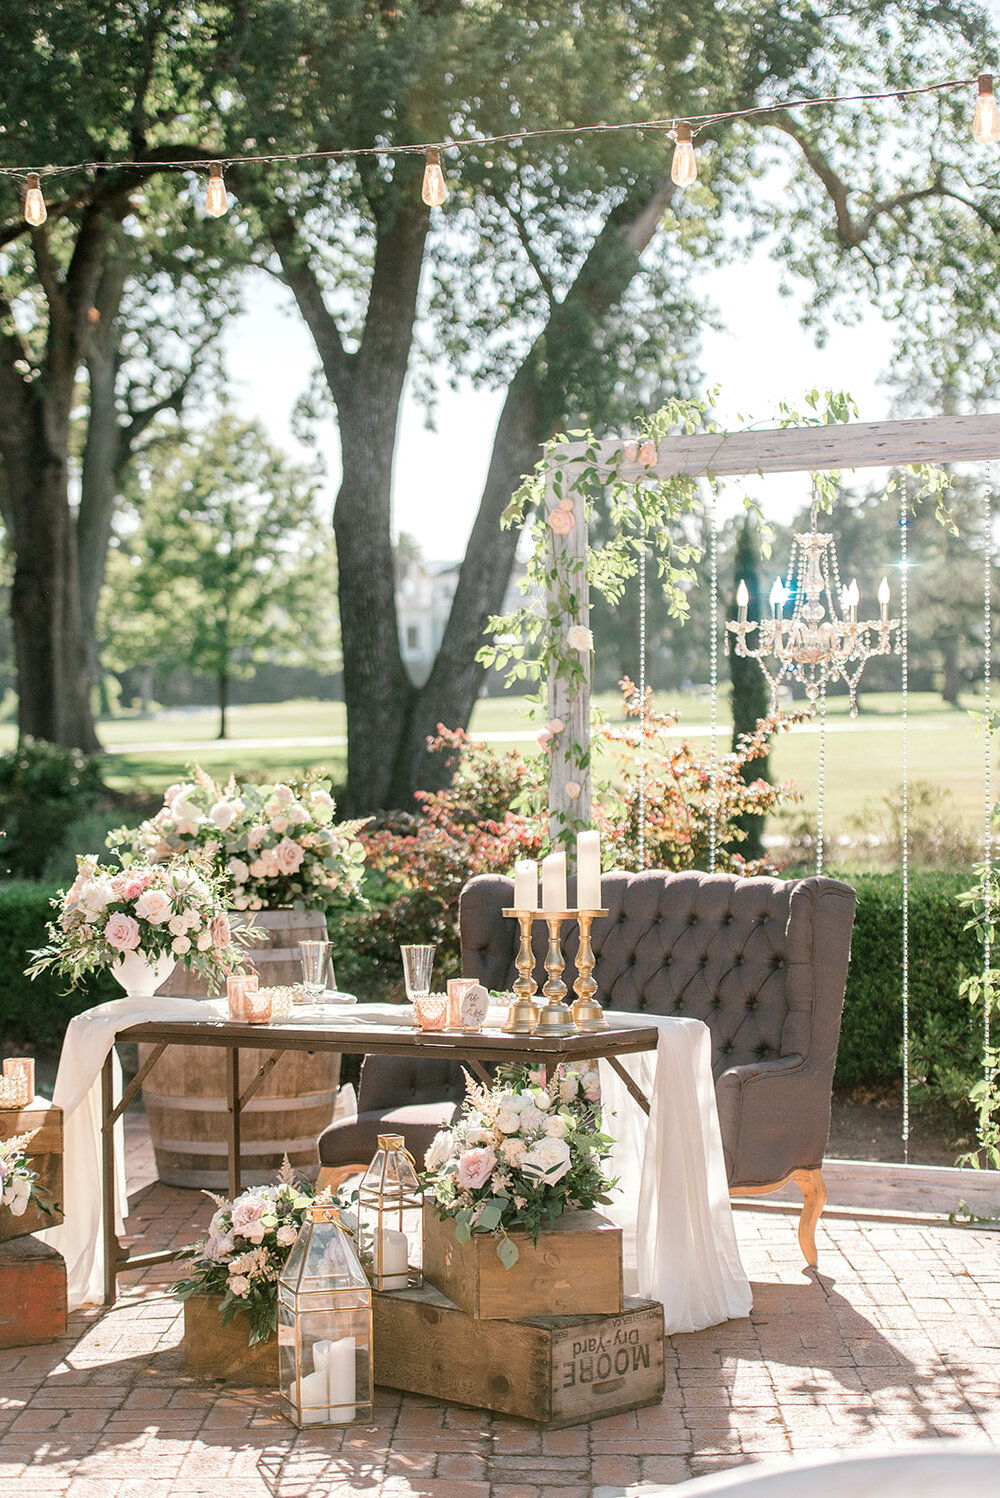 Violette-fleurs-roseville-napa-california-luxury-florist-silverado-resort-and-spa- weddings-by-scott-and-dana-sweetheart-table-details-flowers-wine-crates.jpg